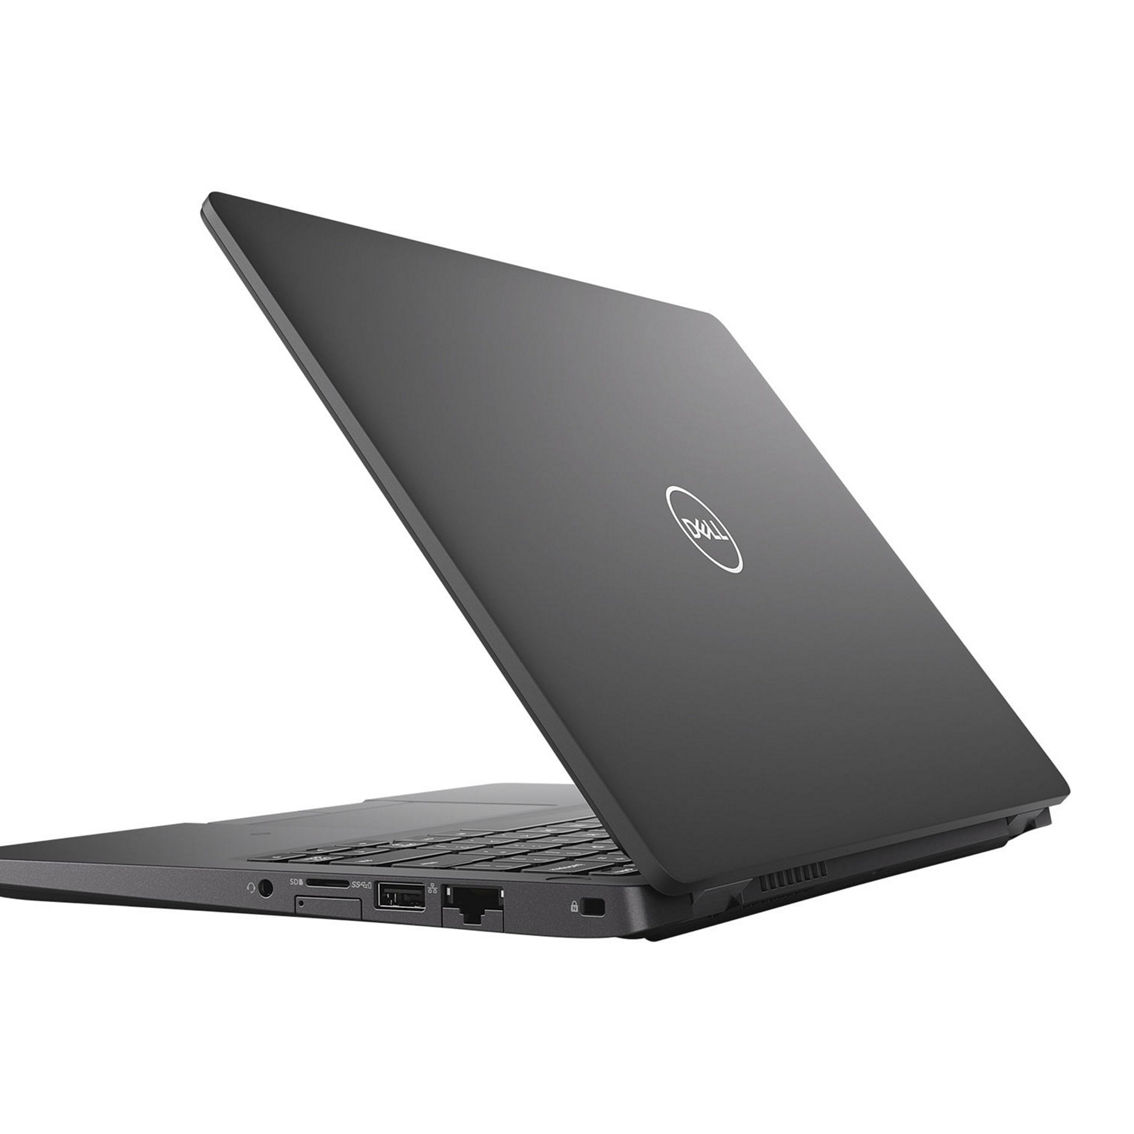 Dell 5300 Core i5-8365U 1.6GHz 16GB Ram 256GB SSD Laptop (Refurbished) - Image 4 of 5